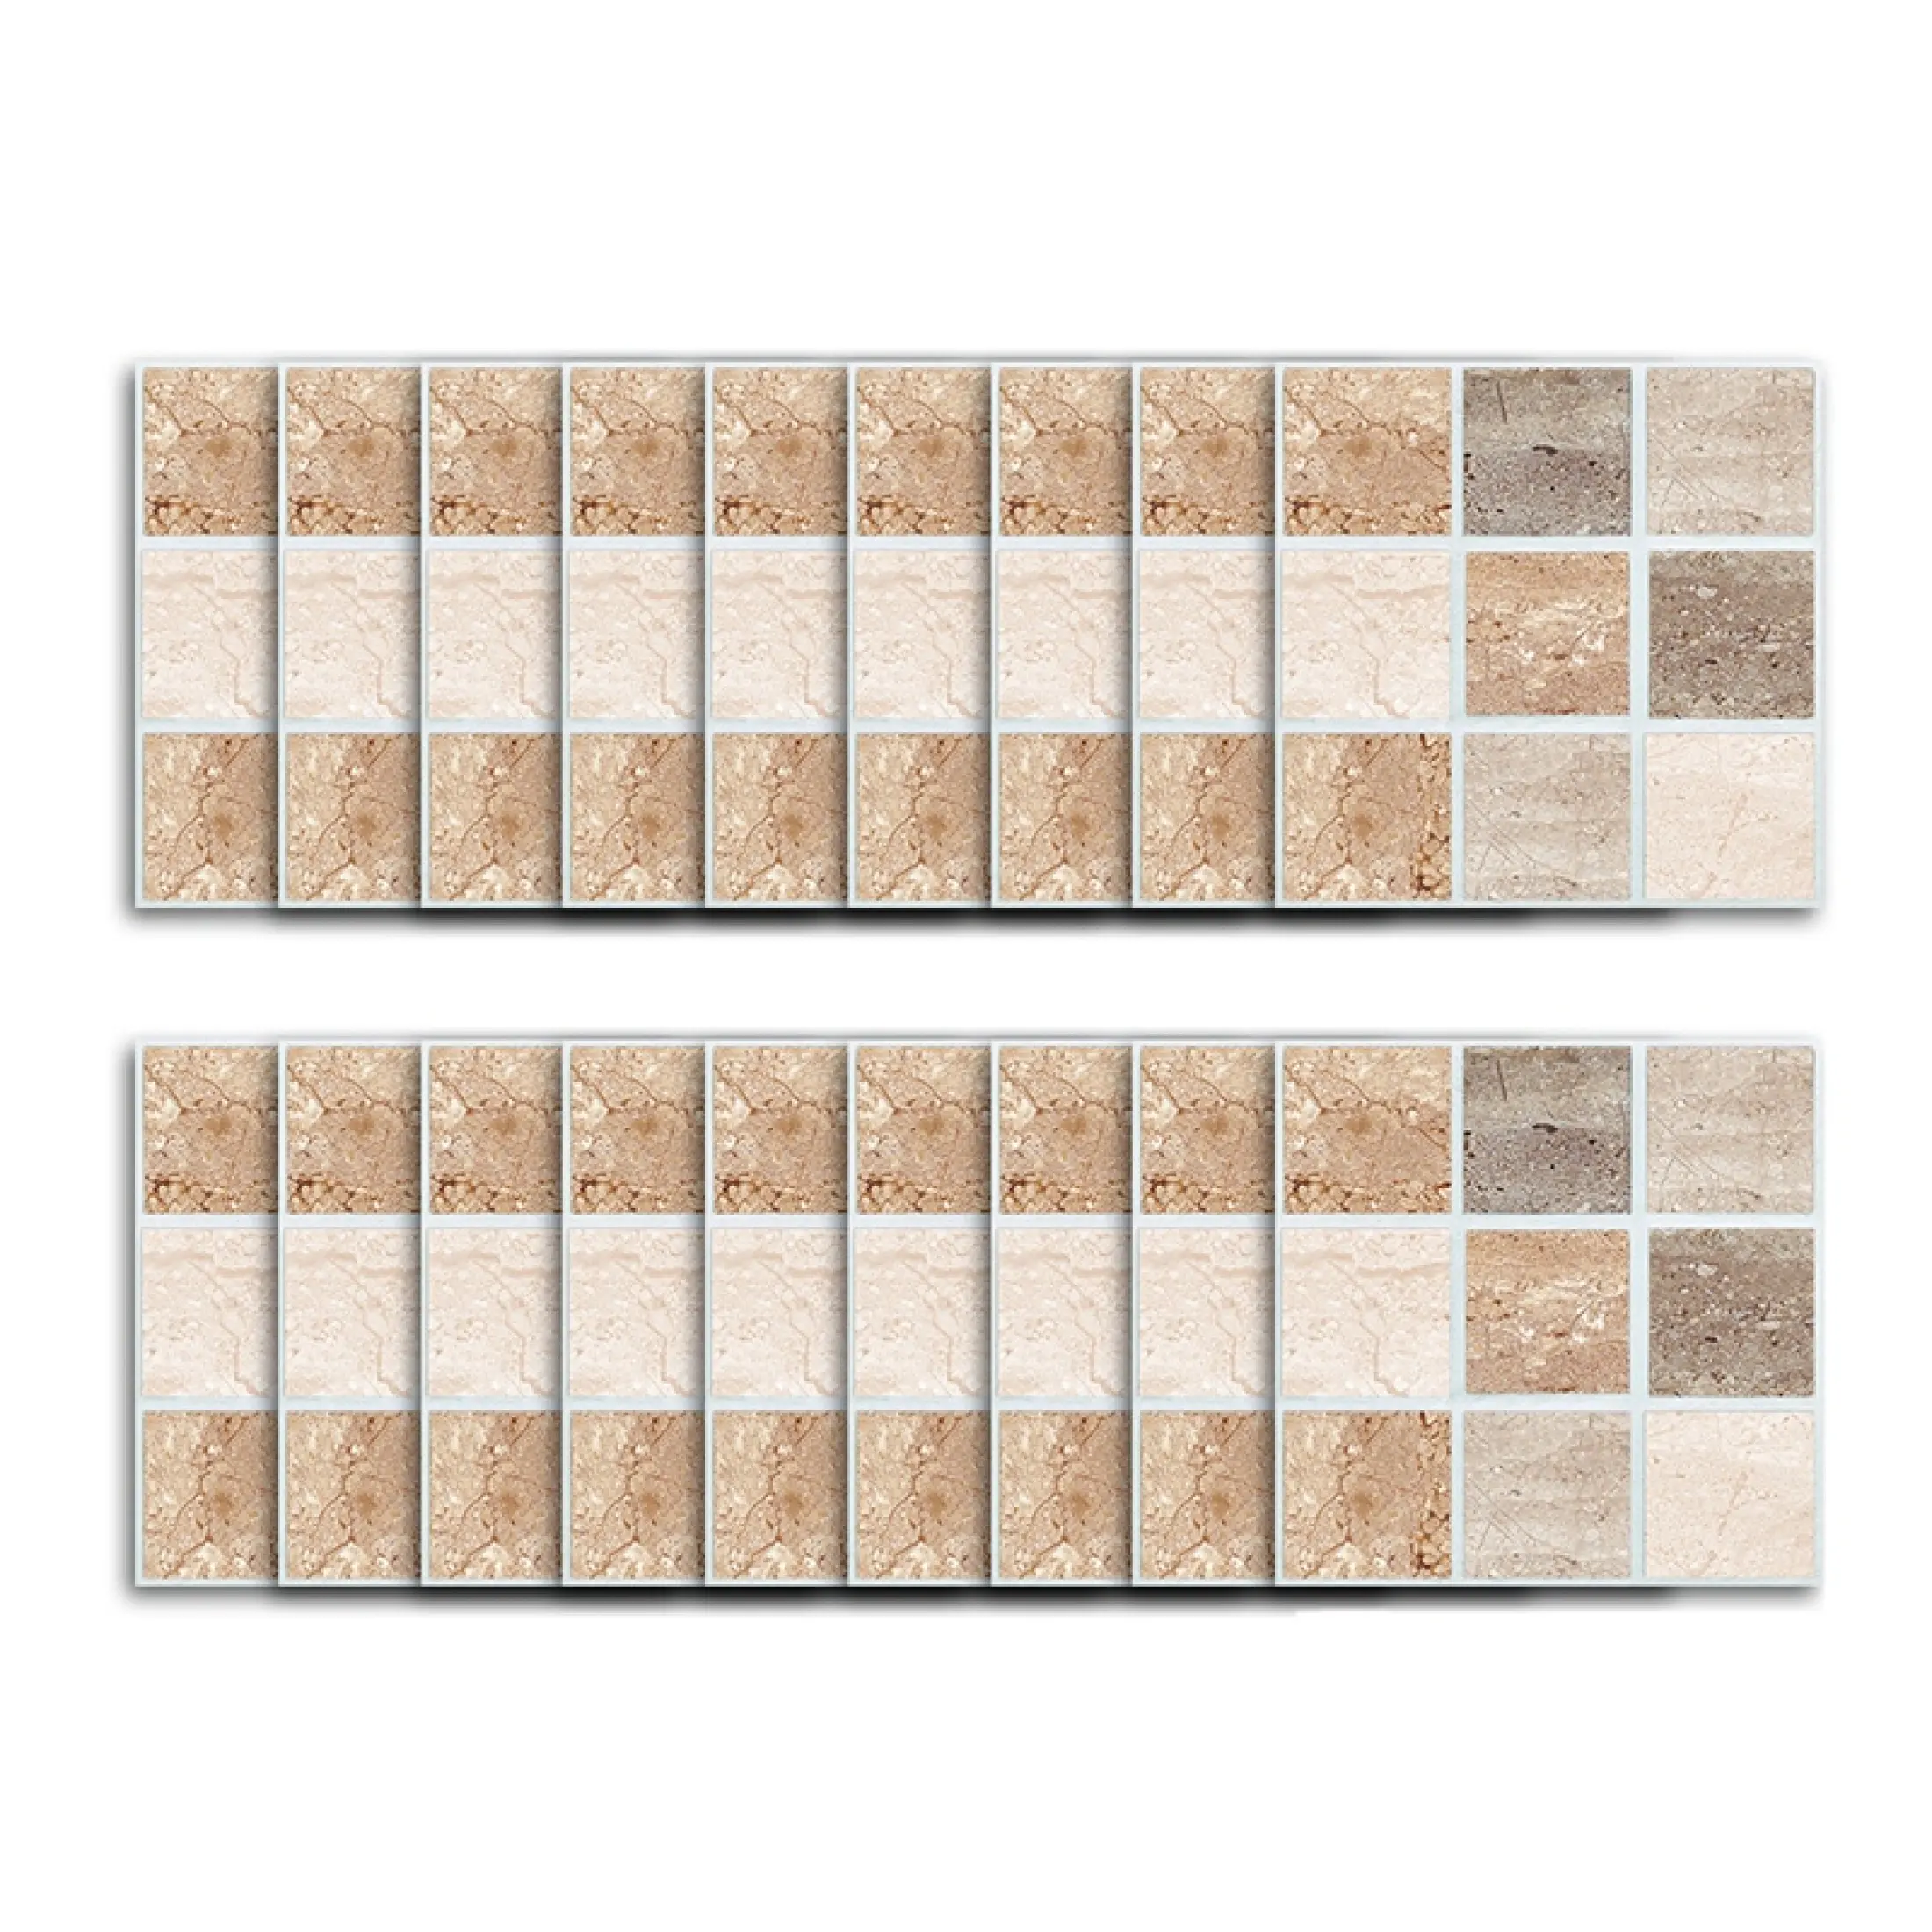 18x Self Adhesive Kitchen Wall Tiles Bathroom Mosaic Tile Sticker Peel /&Stick